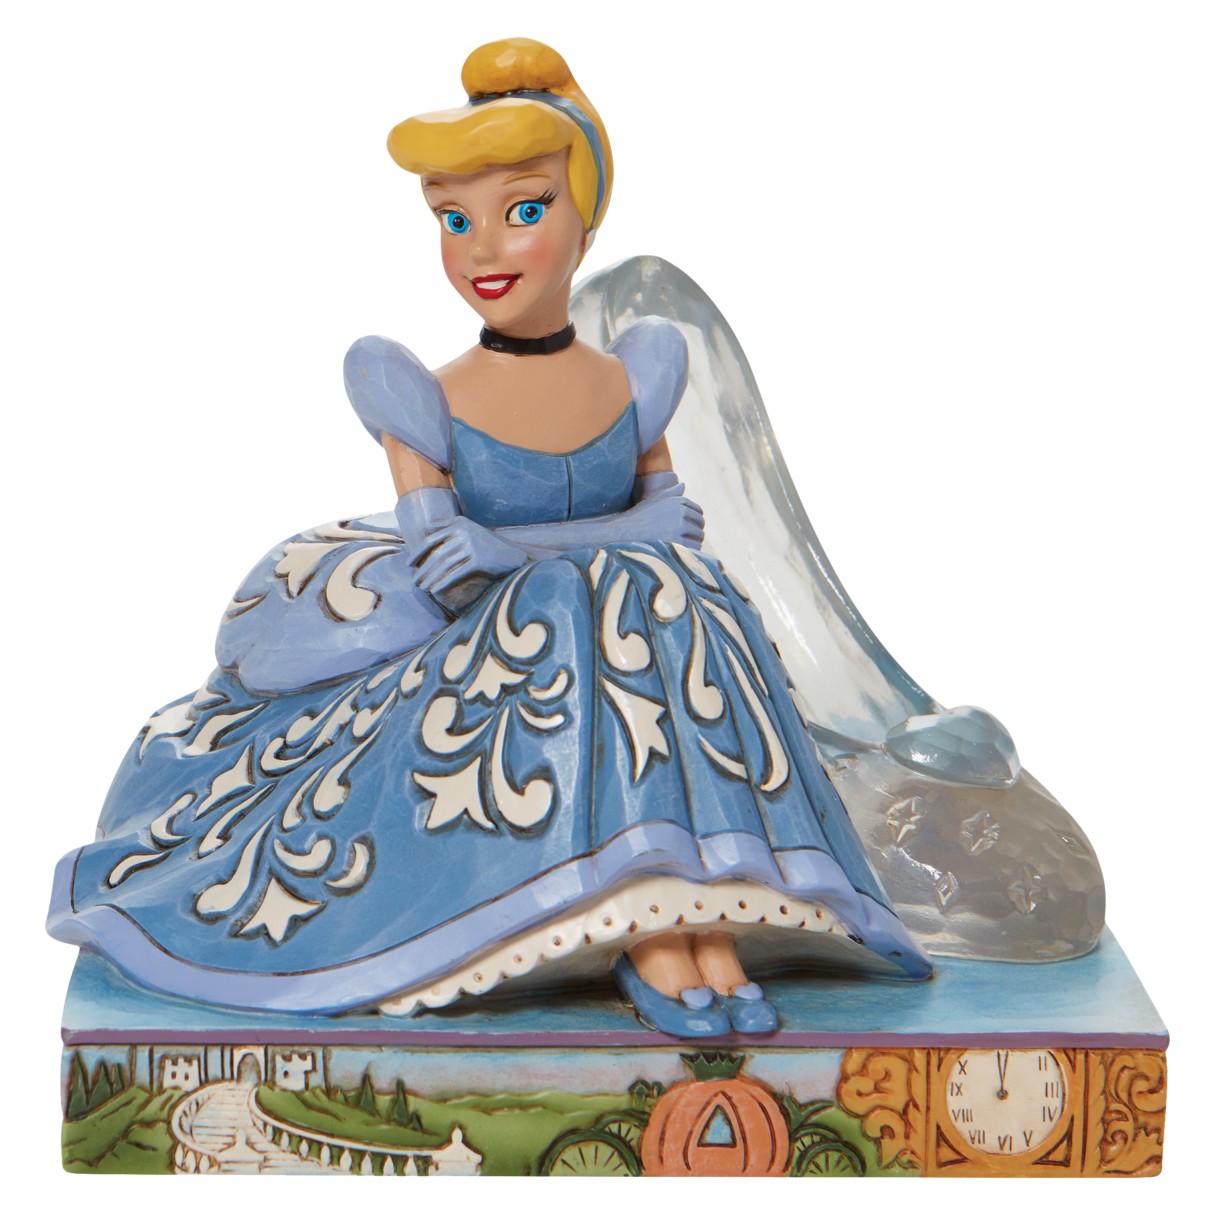 Cinderella Glass Slipper Figure by Jim Shore | shopDisney